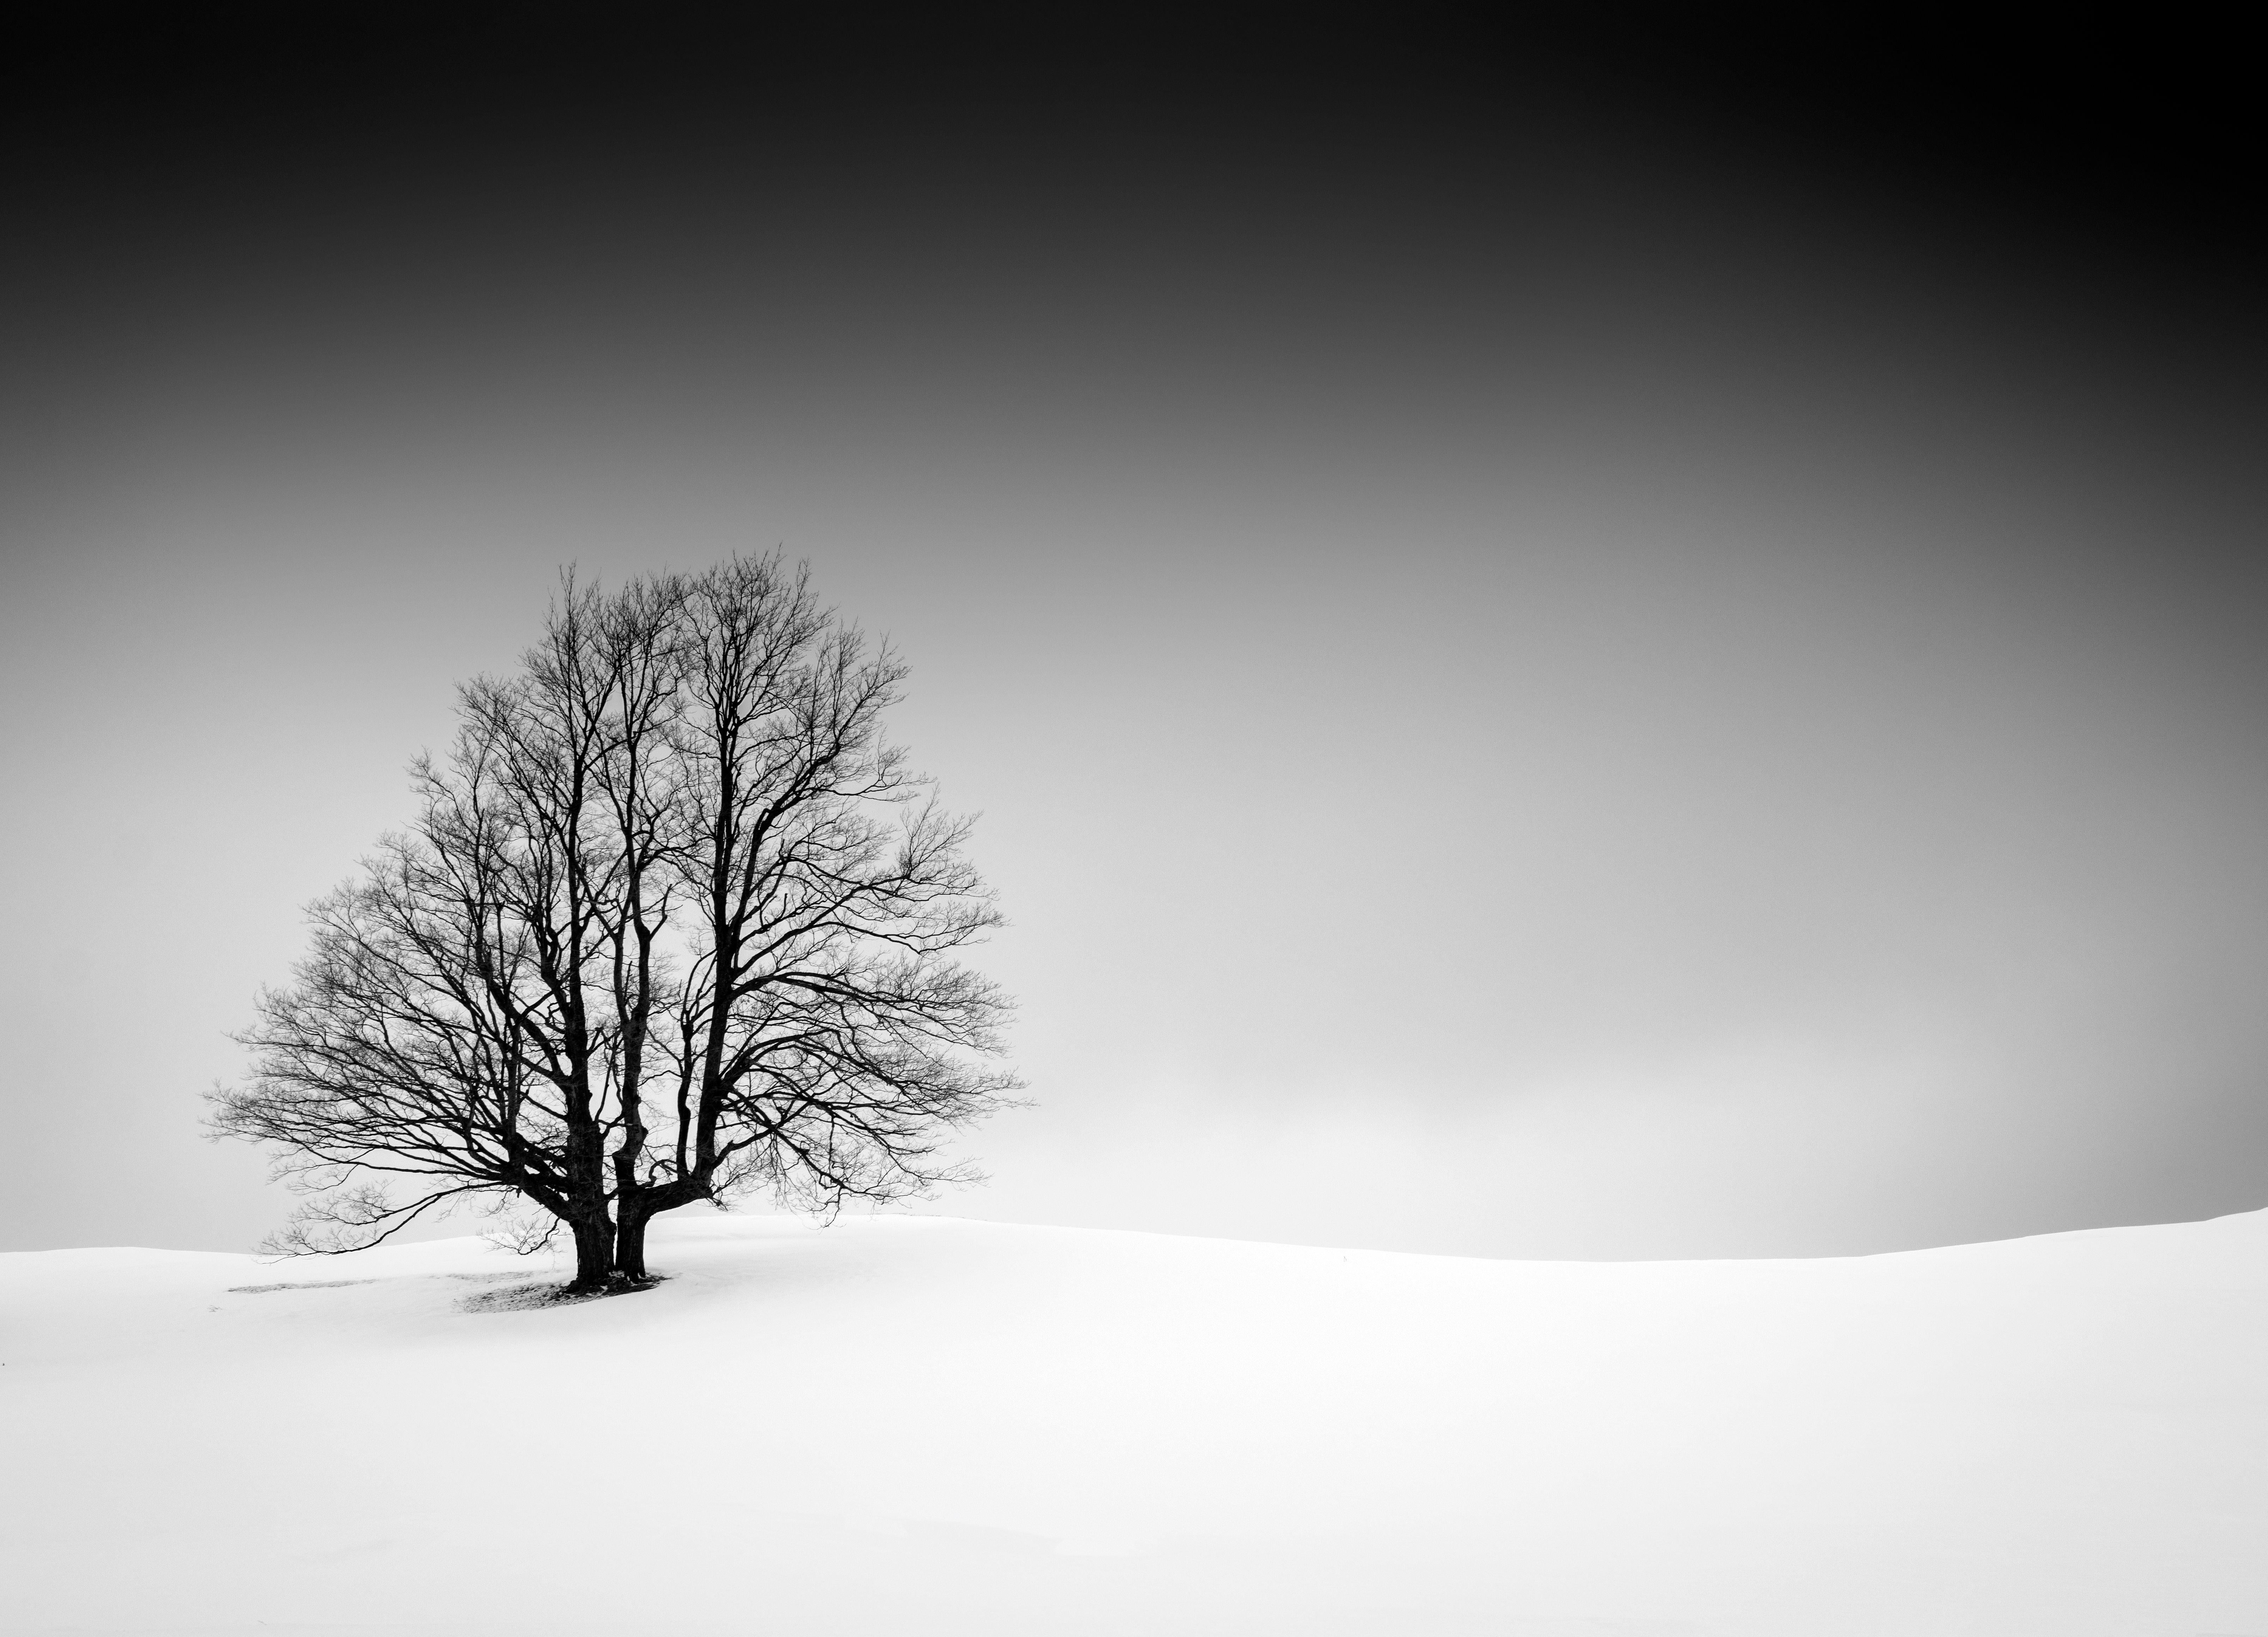 Rick Bogacz Landscape Photograph - "Tree on Snowy Hillside", signed archival pigment print